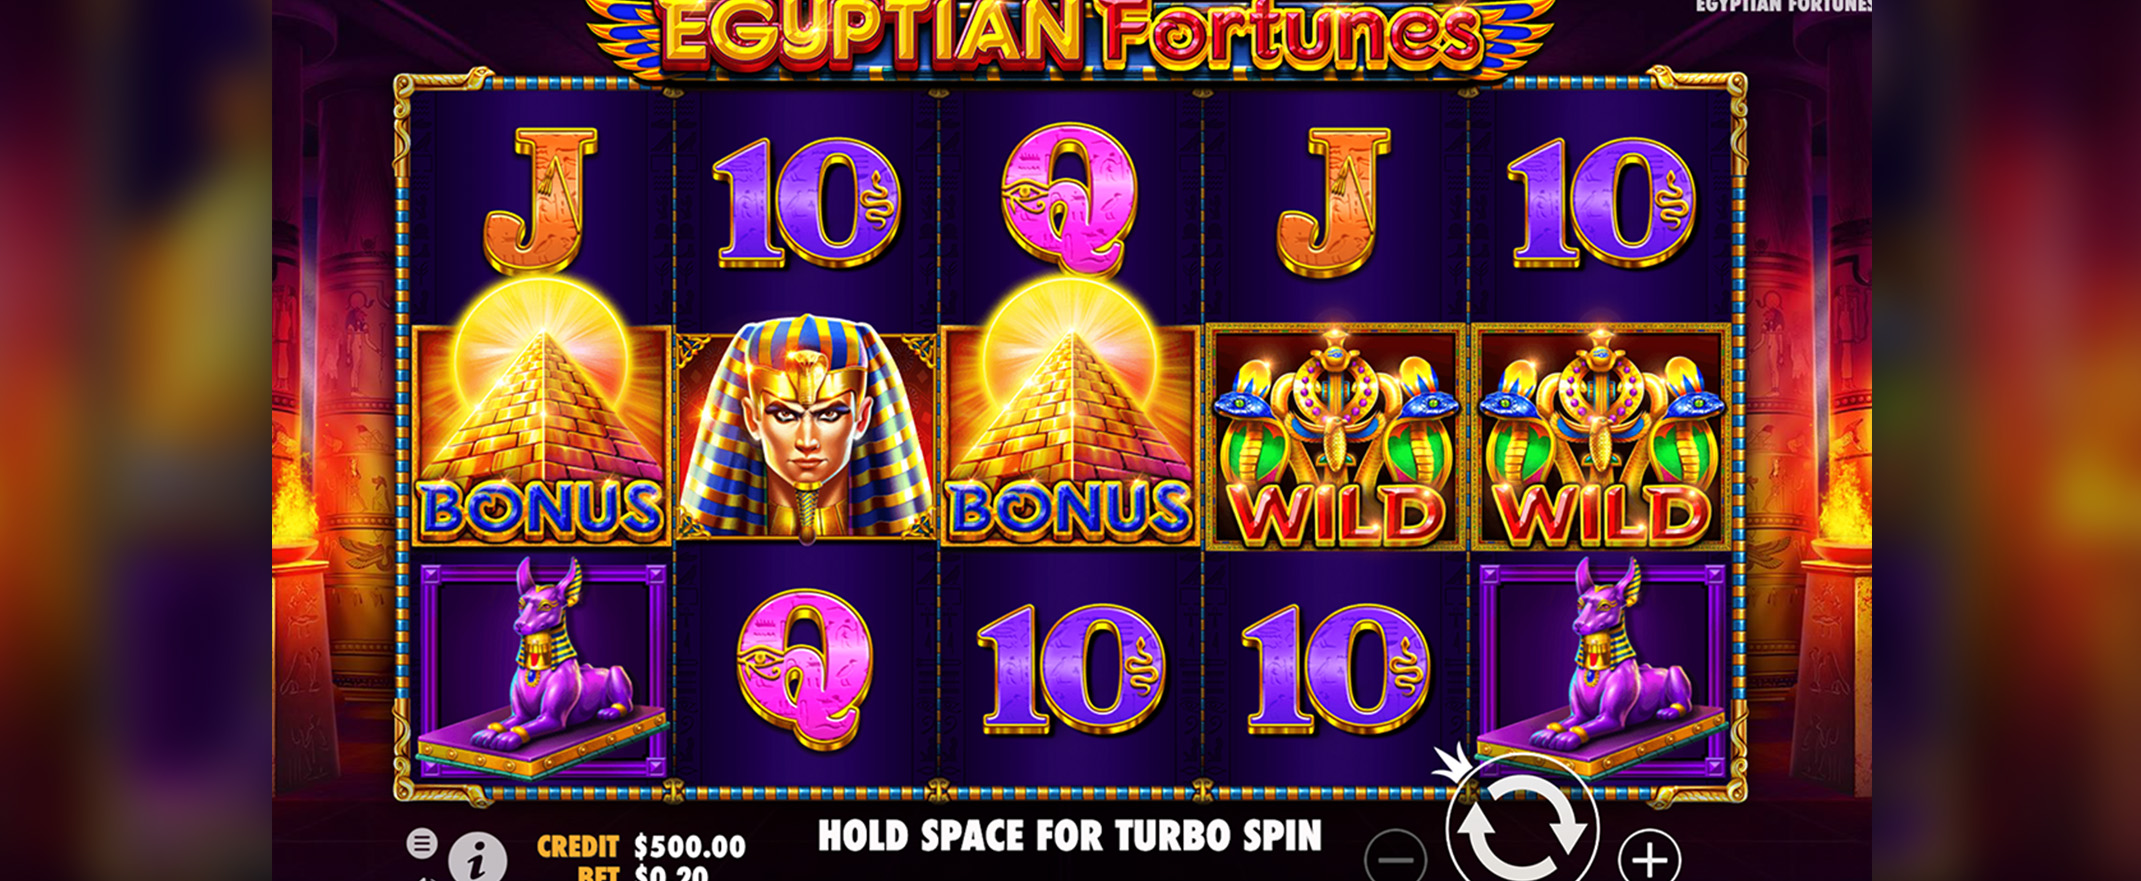 egyptian fortunes pragmatic play